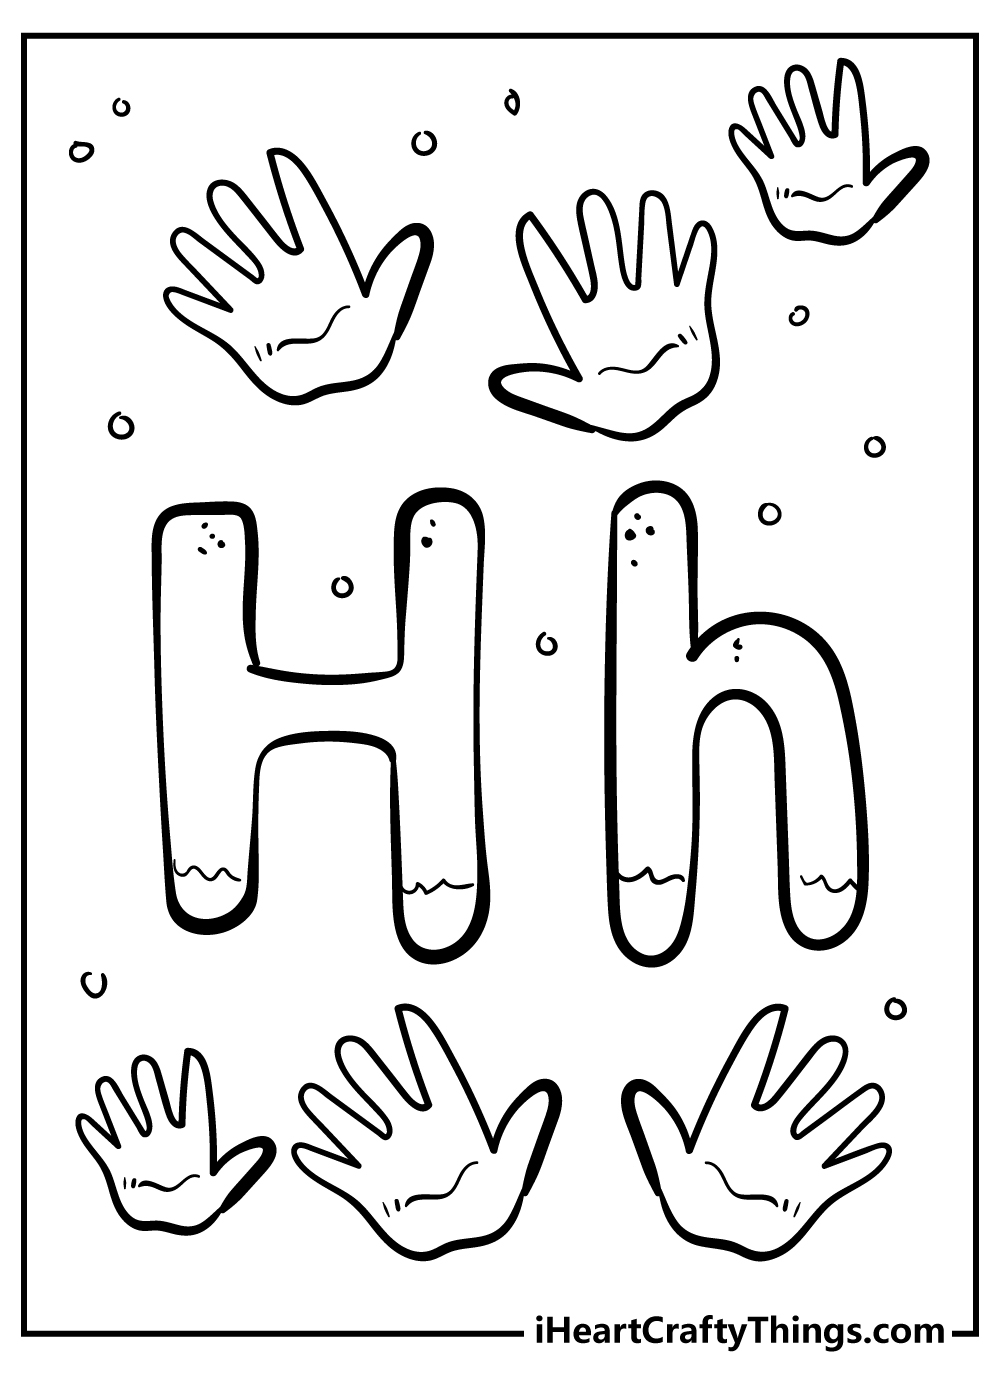 Letter H Coloring Sheet for children free download